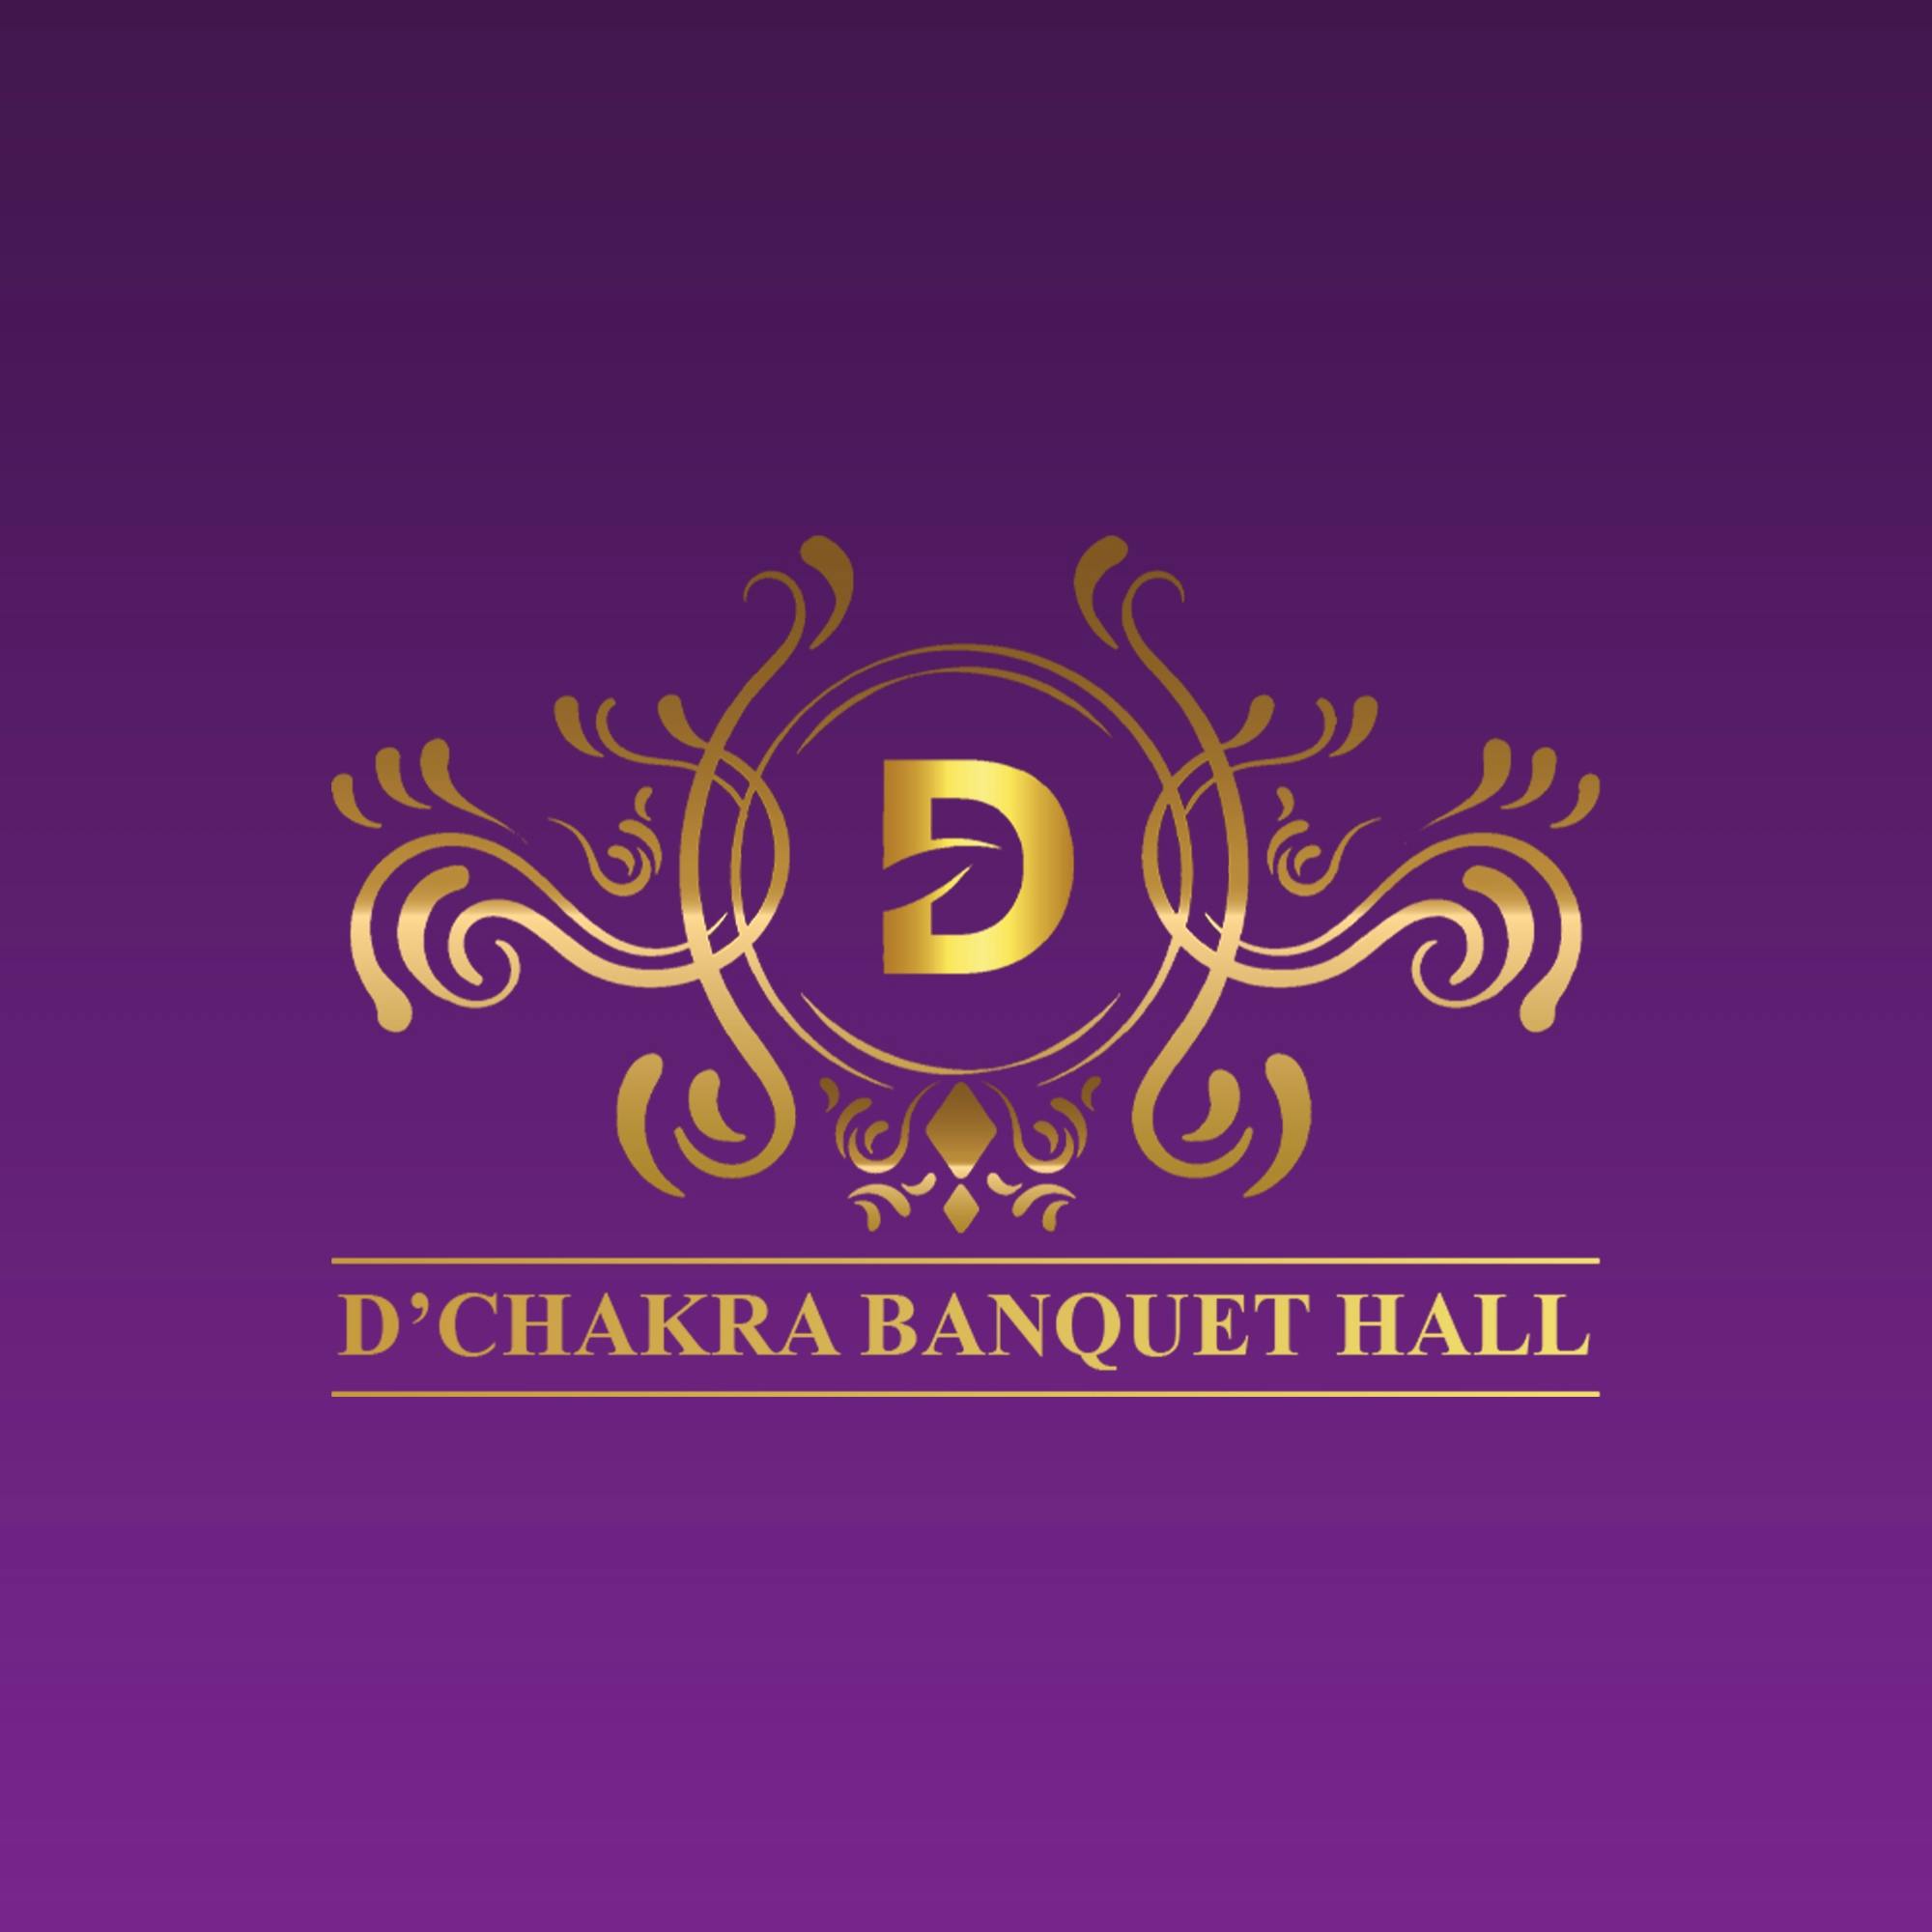 D Chakra Banquet Hall logo